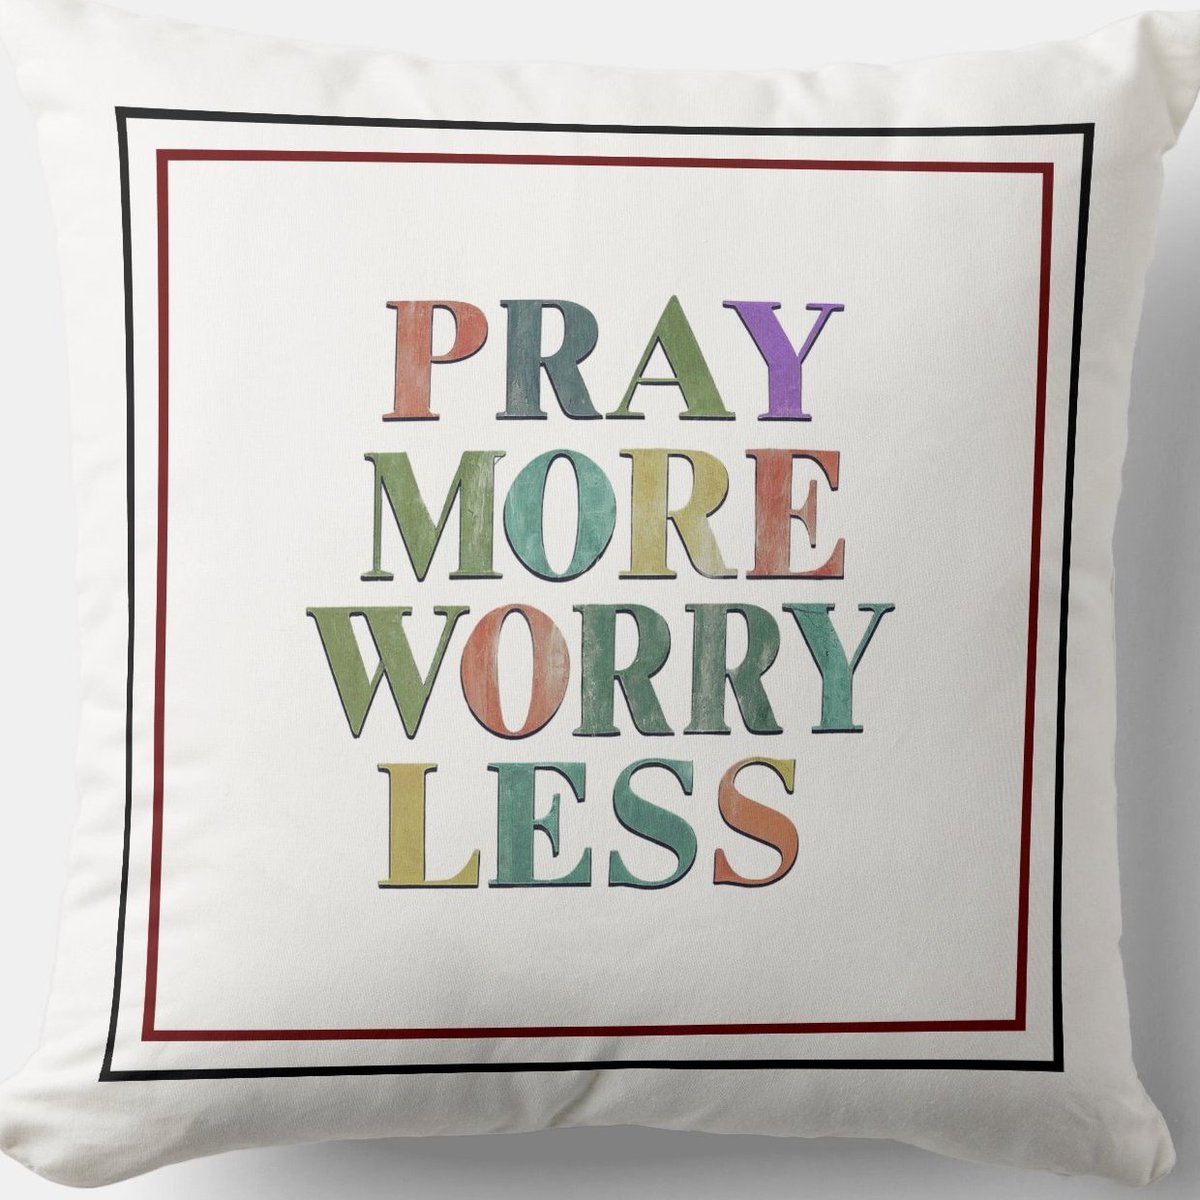 Pray More, Worry Less Throw #Cushion zazzle.com/pray_more_worr… Daily Prayer #Pillow #Blessing #JesusChrist #JesusSaves #Jesus #christian #spiritual #Homedecoration #uniquegift #giftideas #MothersDayGifts #giftformom #giftidea #HolySpirit #pillows #giftshop #giftsforher #giftsformom